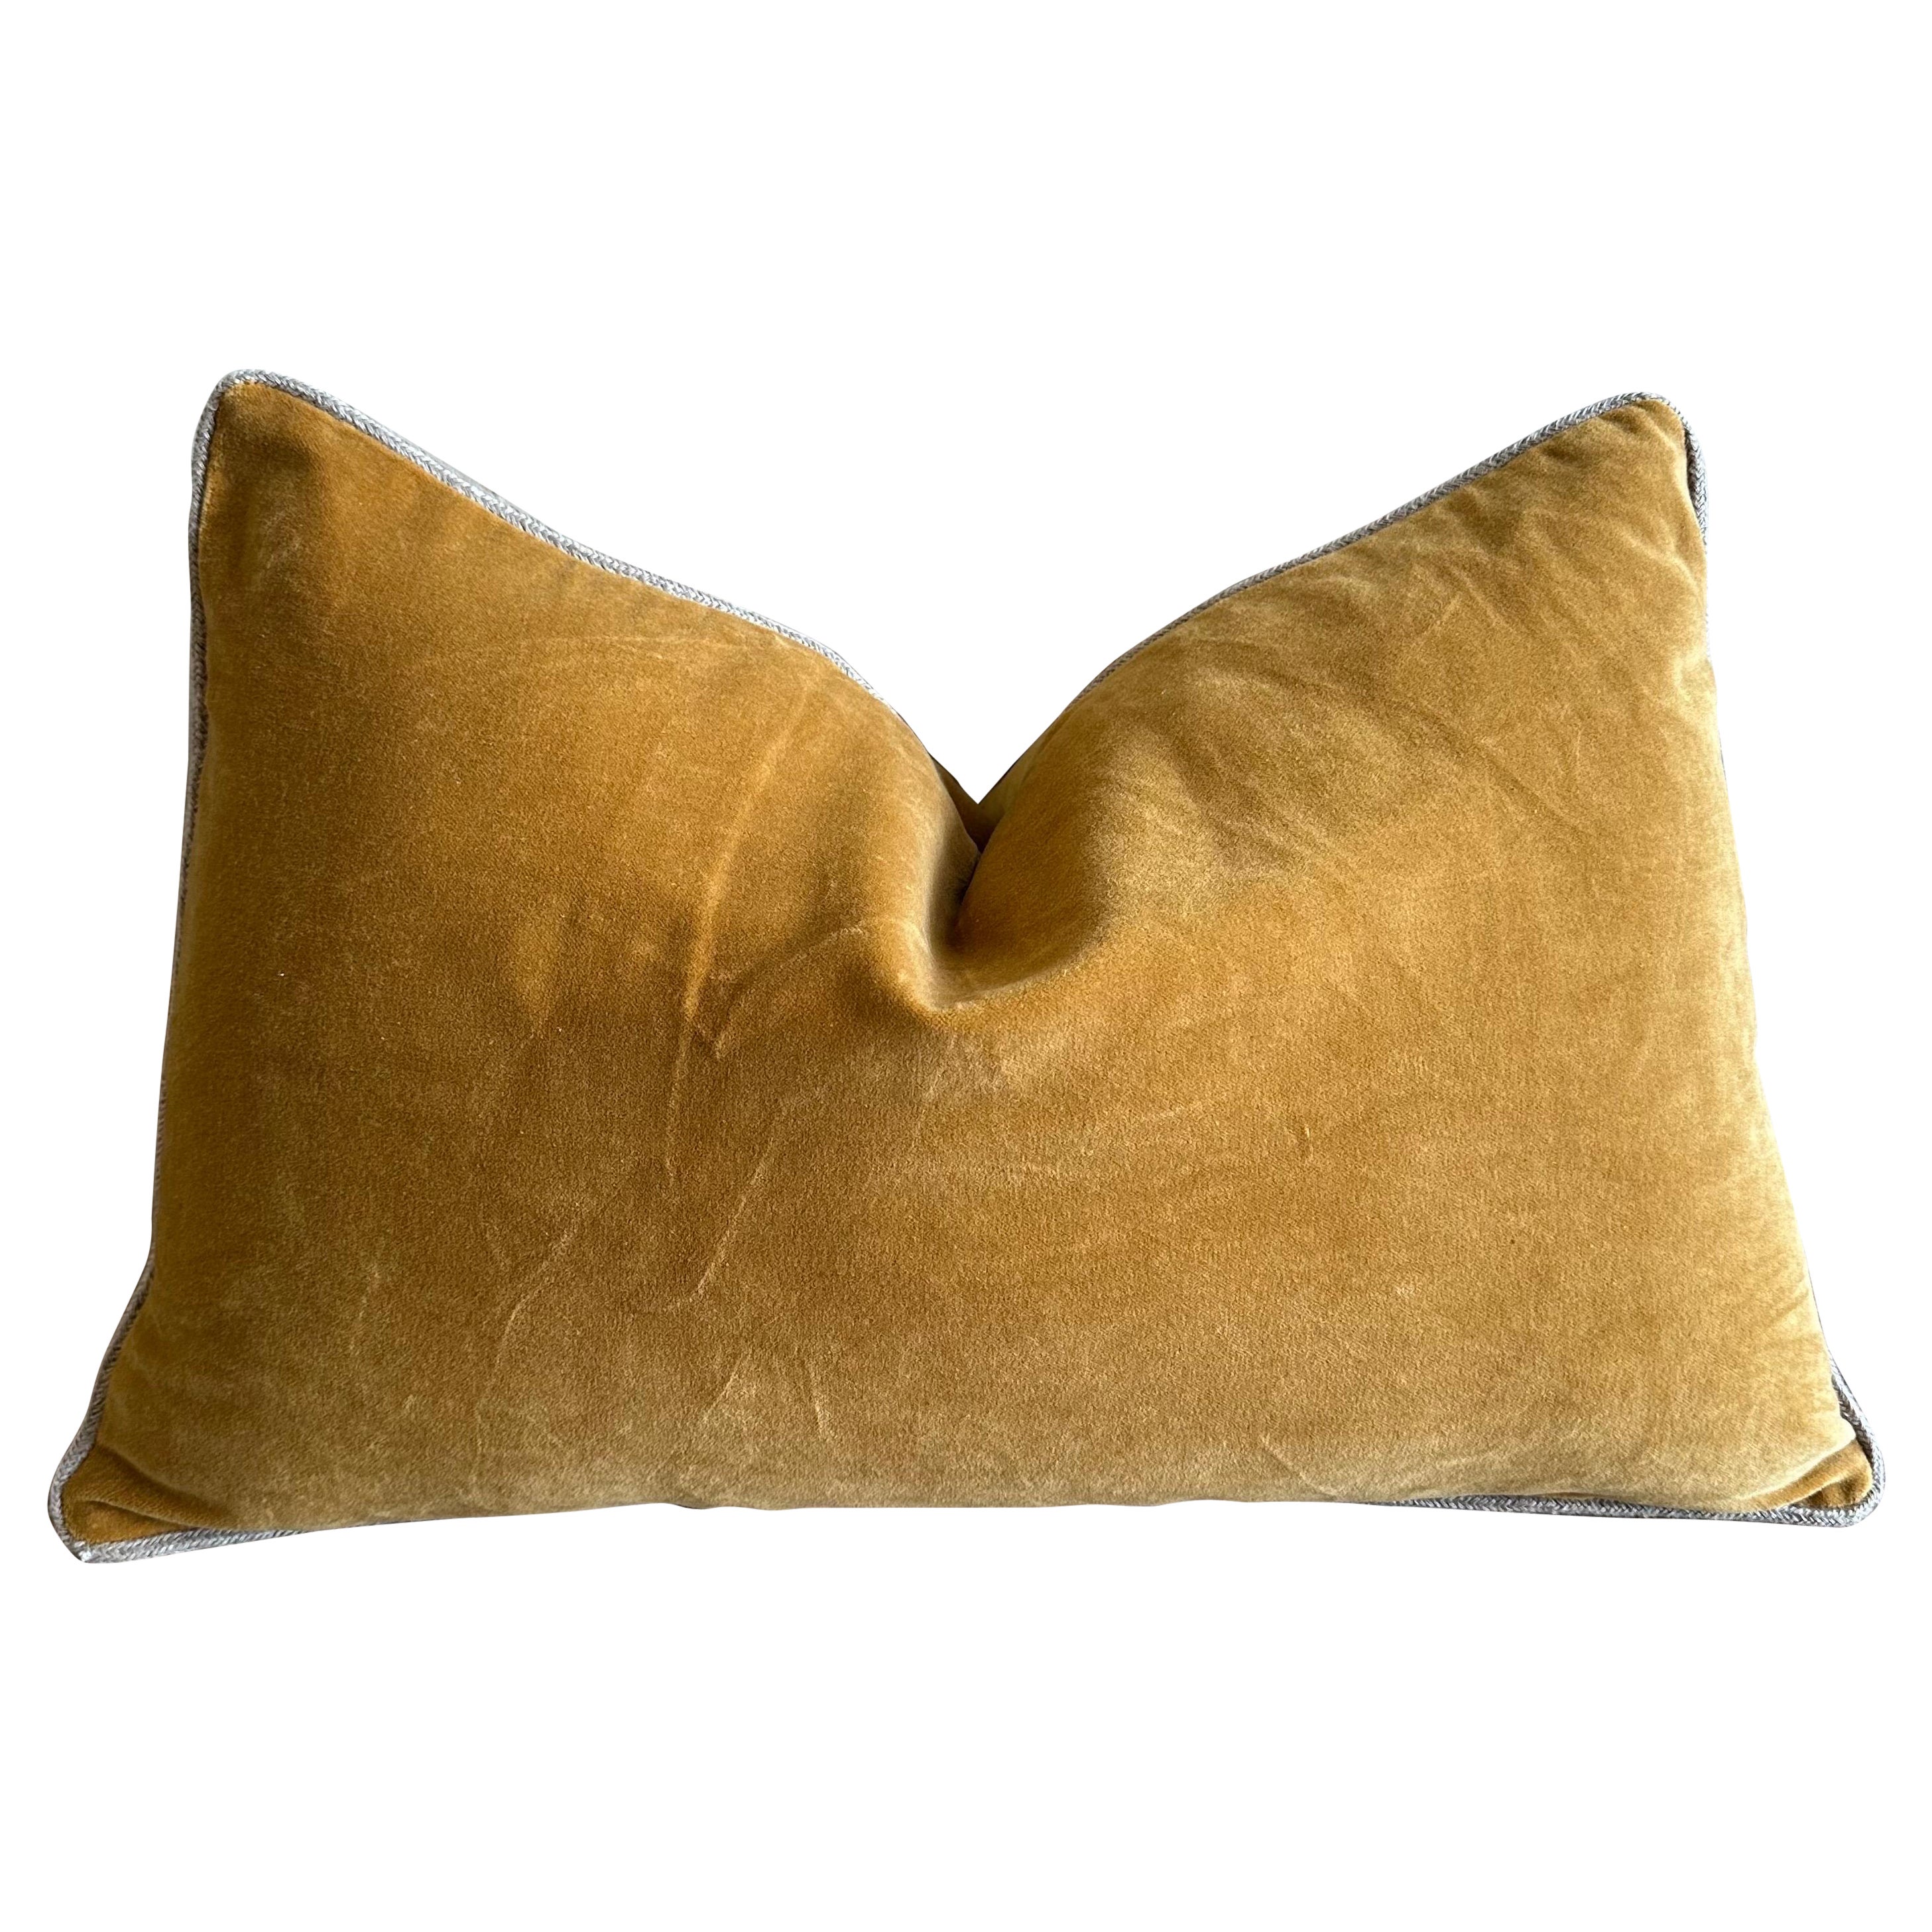 French Cotton Velvet Lumbar Pillow with Jute Trim